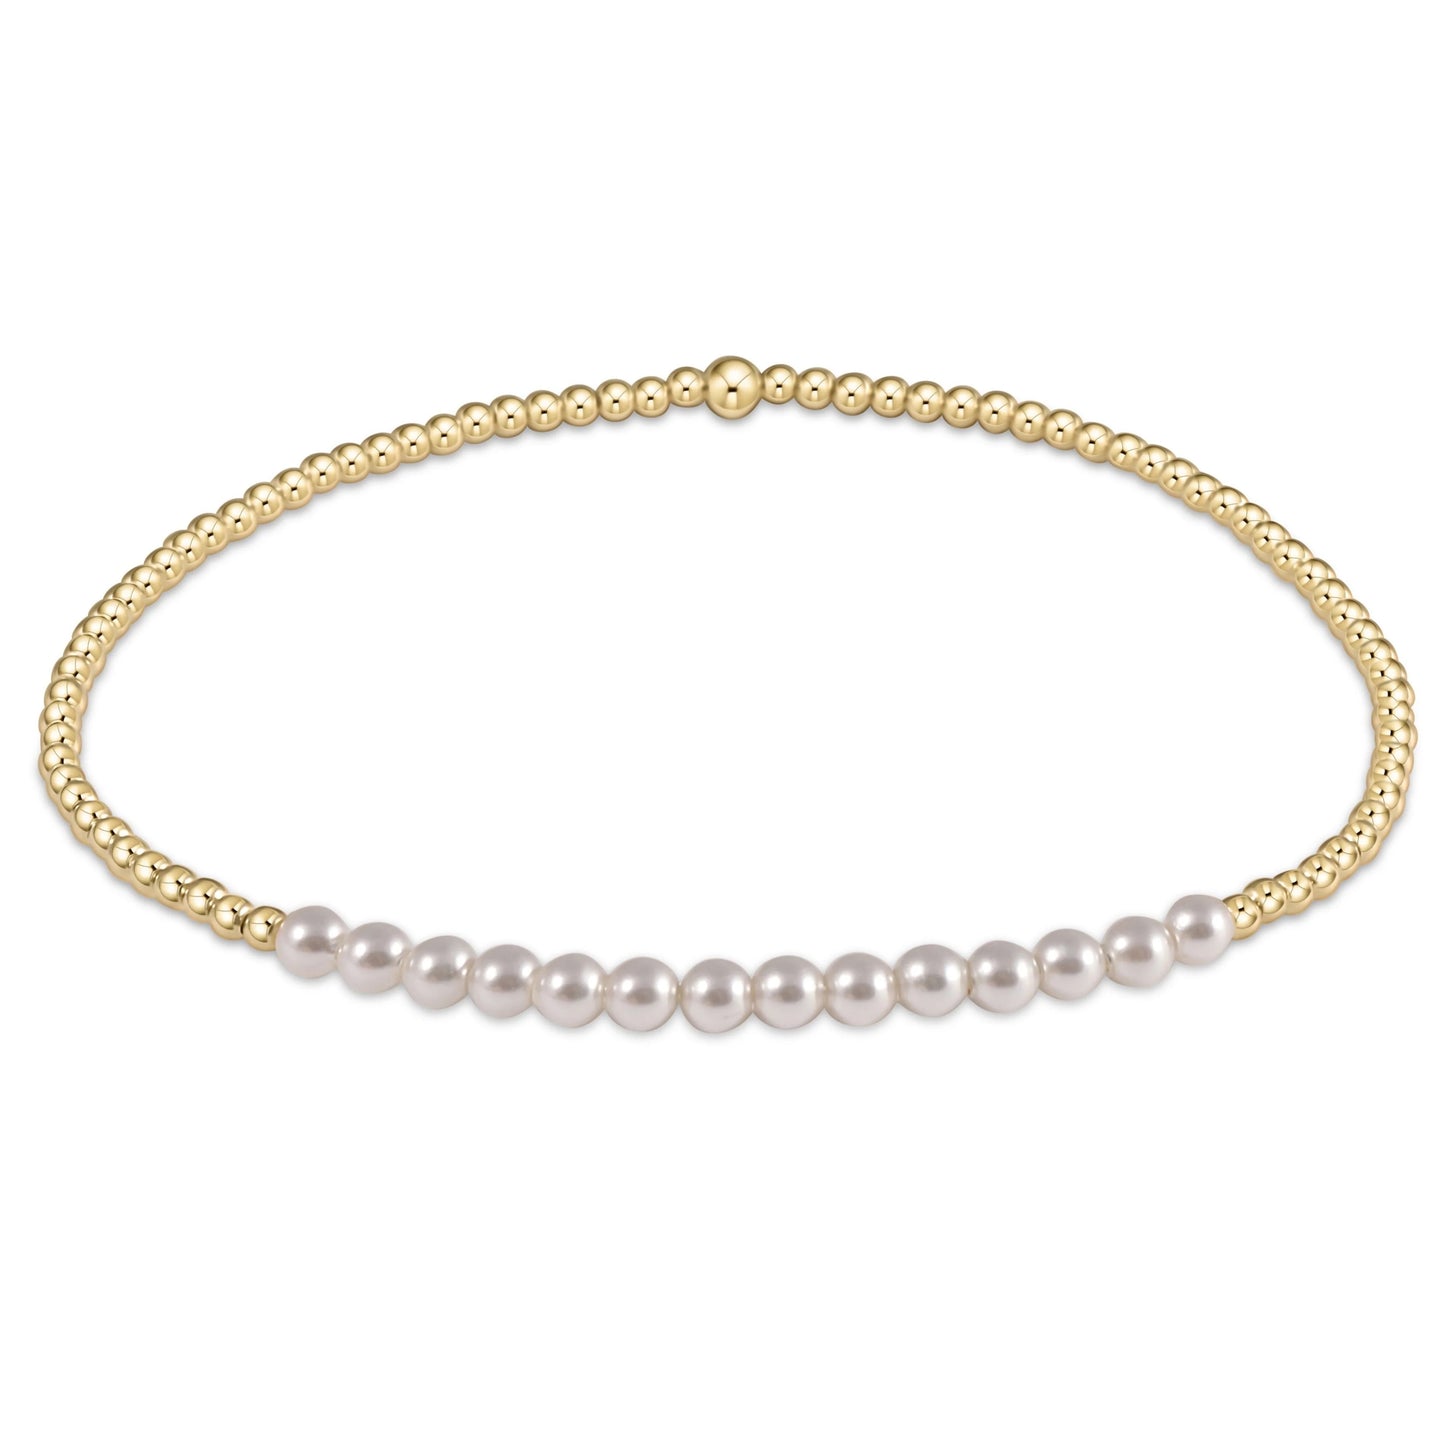 Enewton - gold bliss 2mm bead bracelet in Pearl - Findlay Rowe Designs